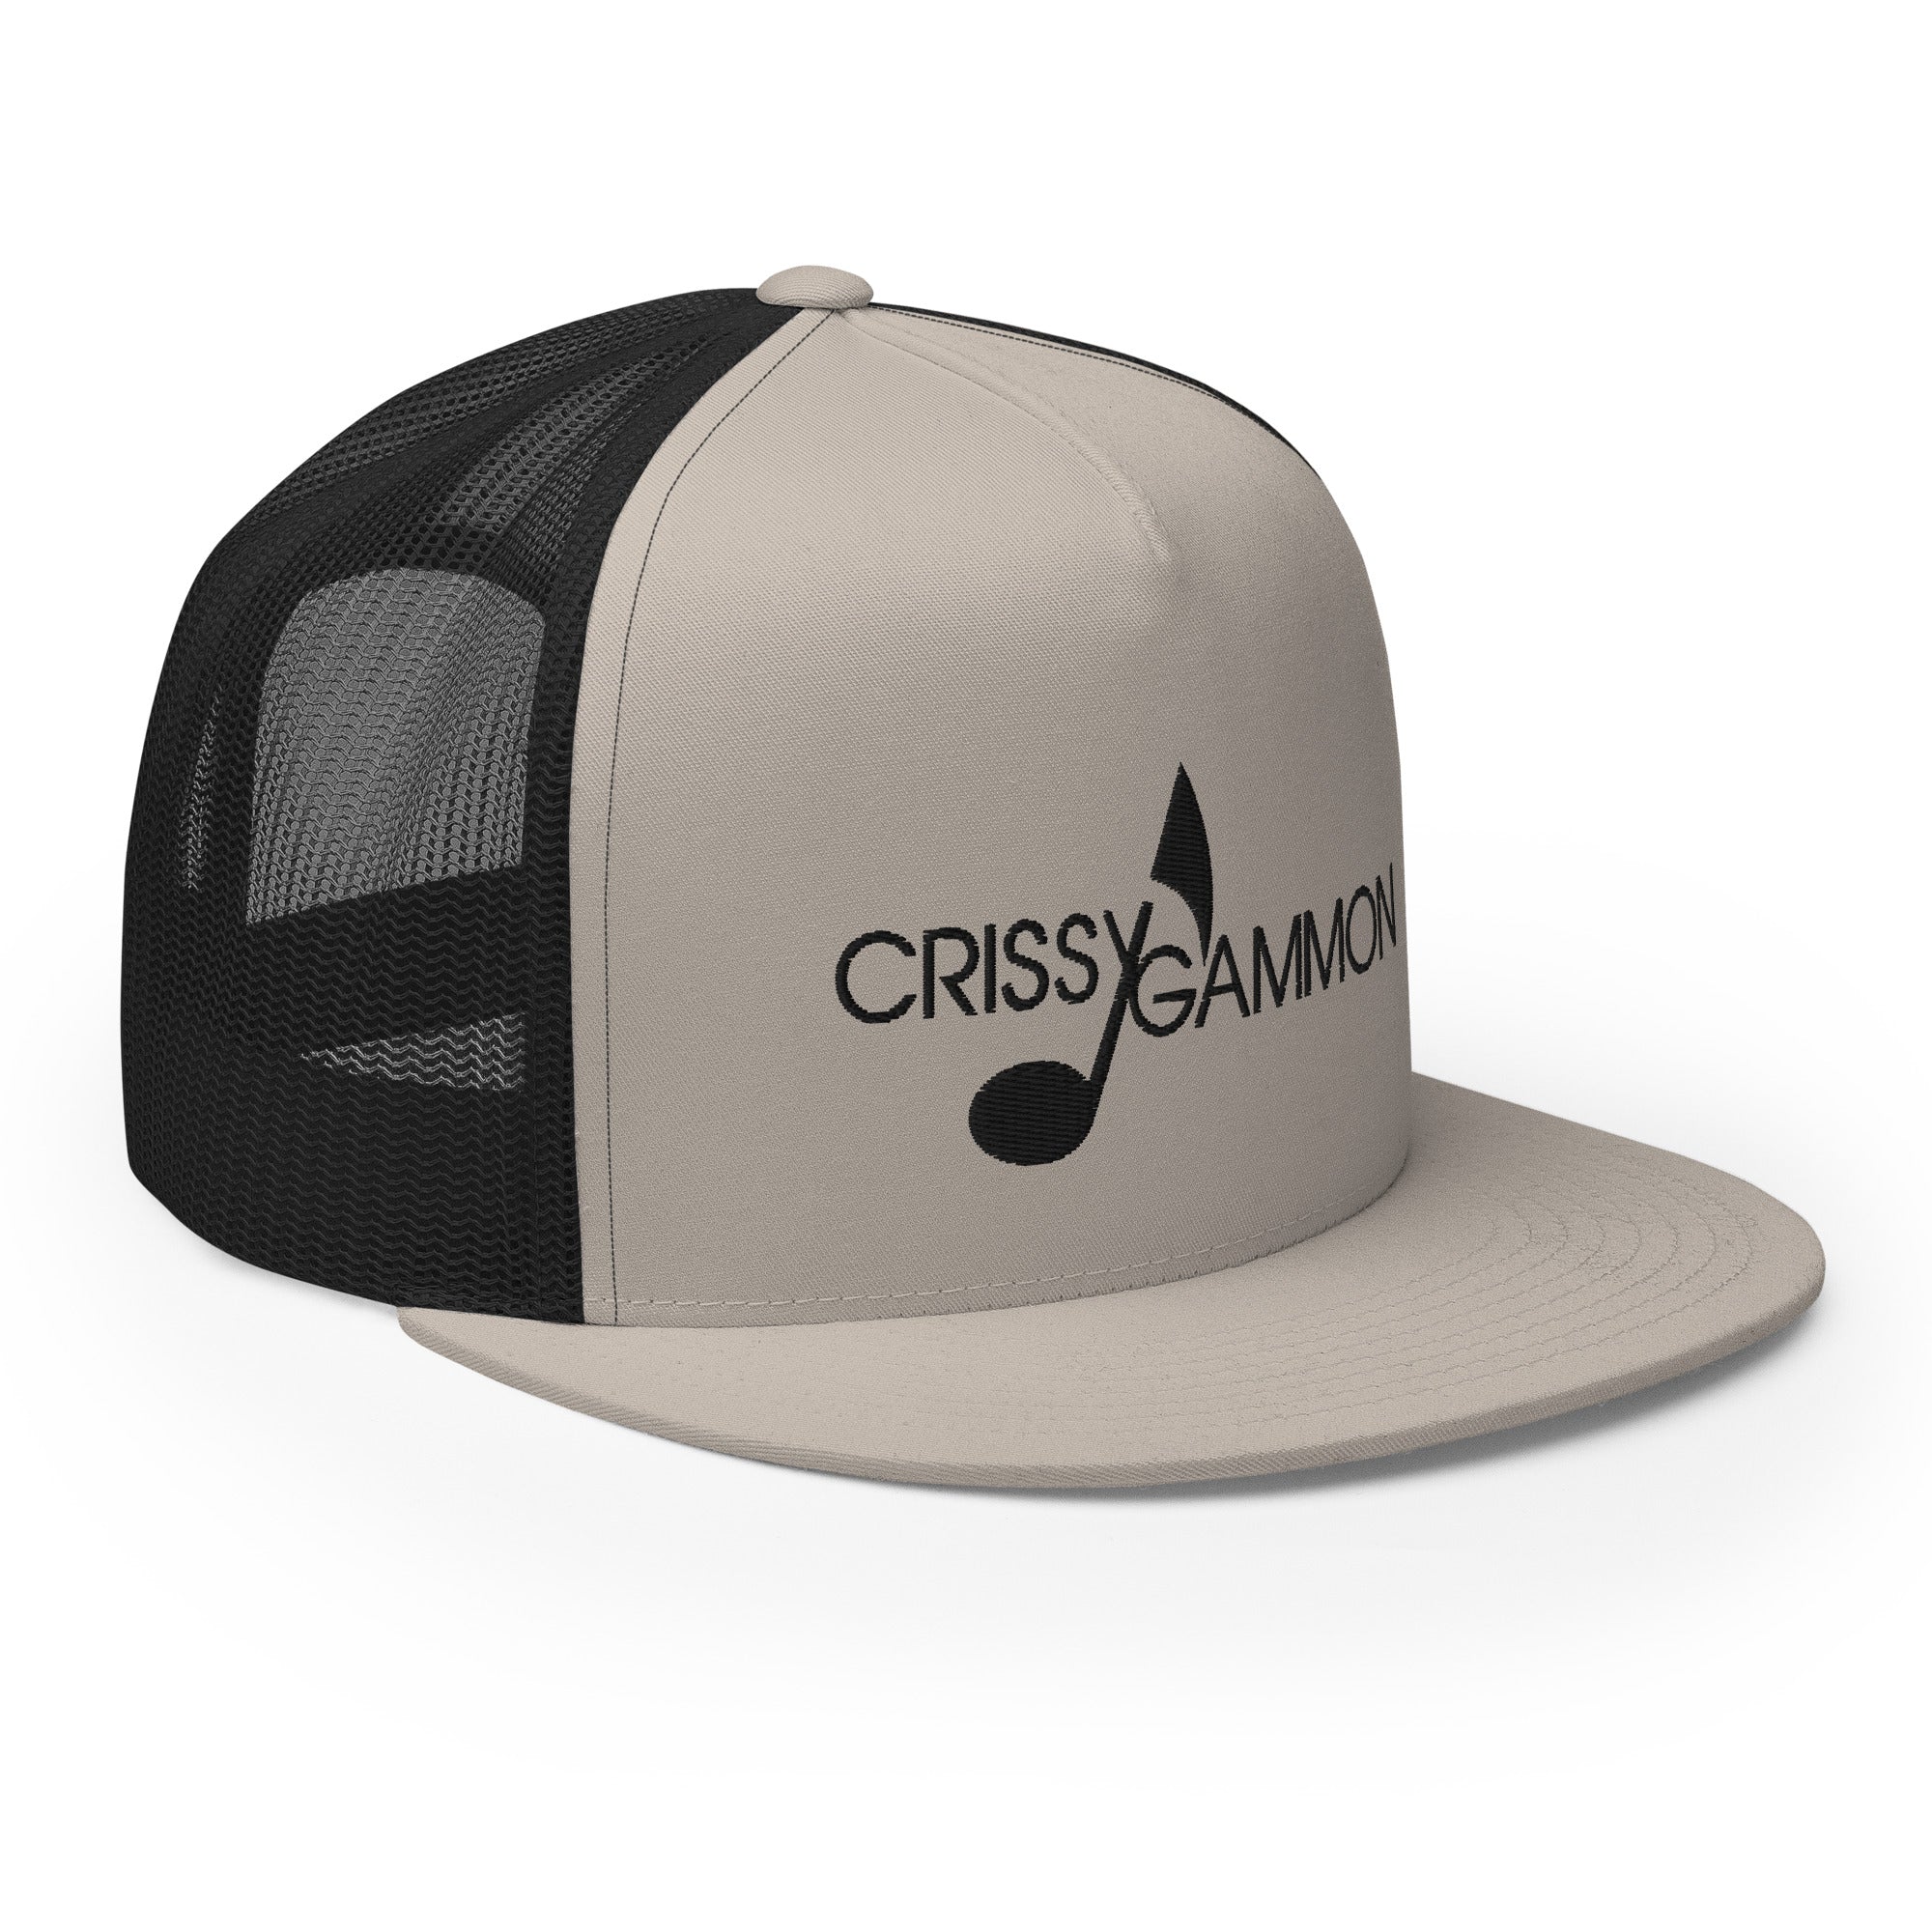 Crissy-Gammon - Trucker Cap